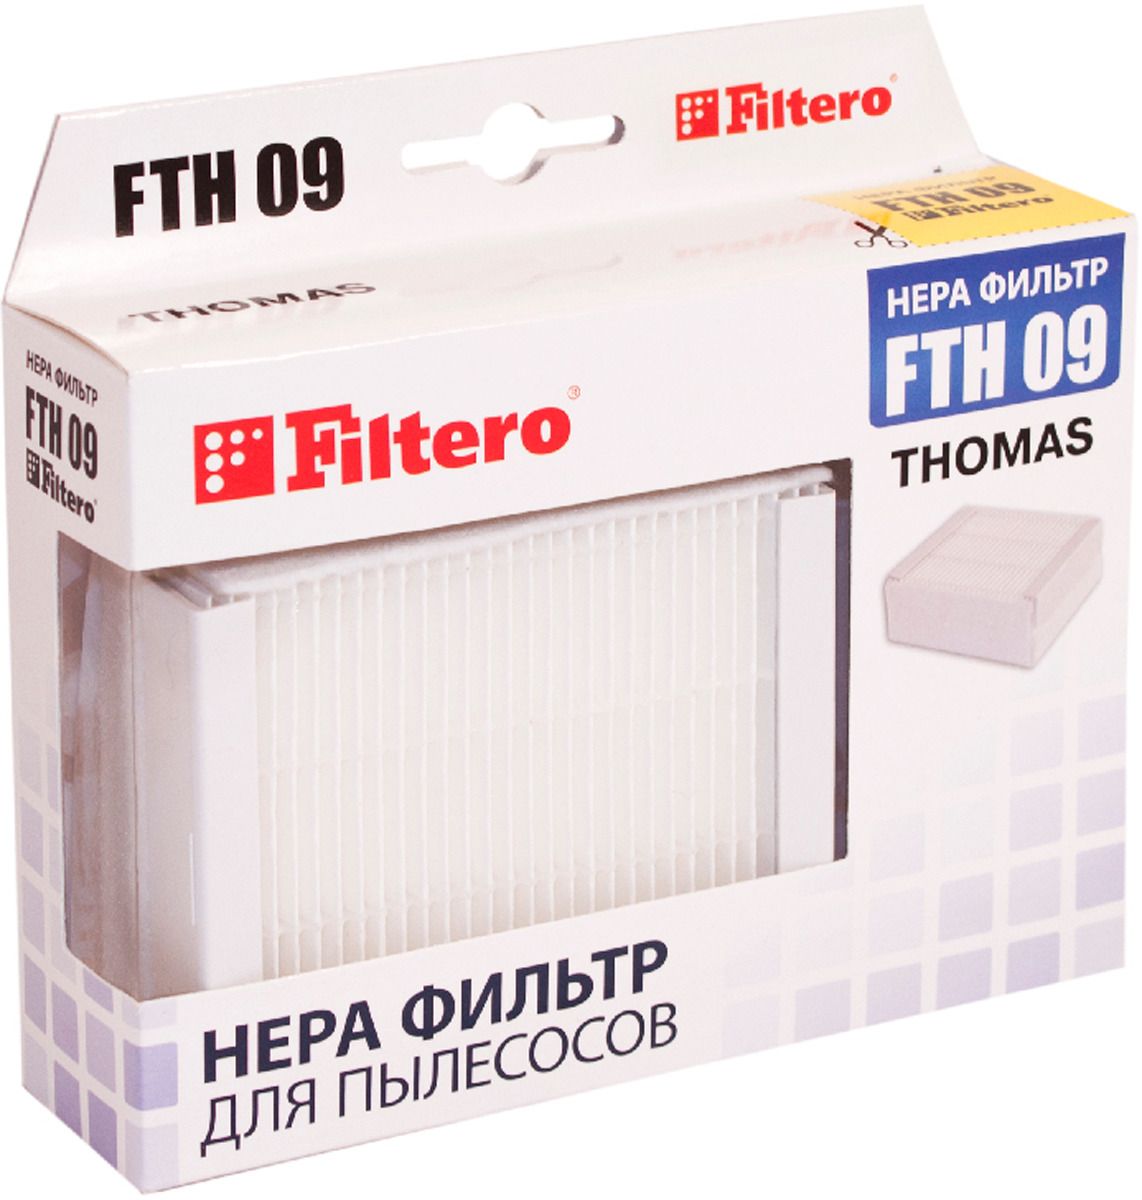 HEPA  Filtero FTH 09 TMS,   Thomas XT